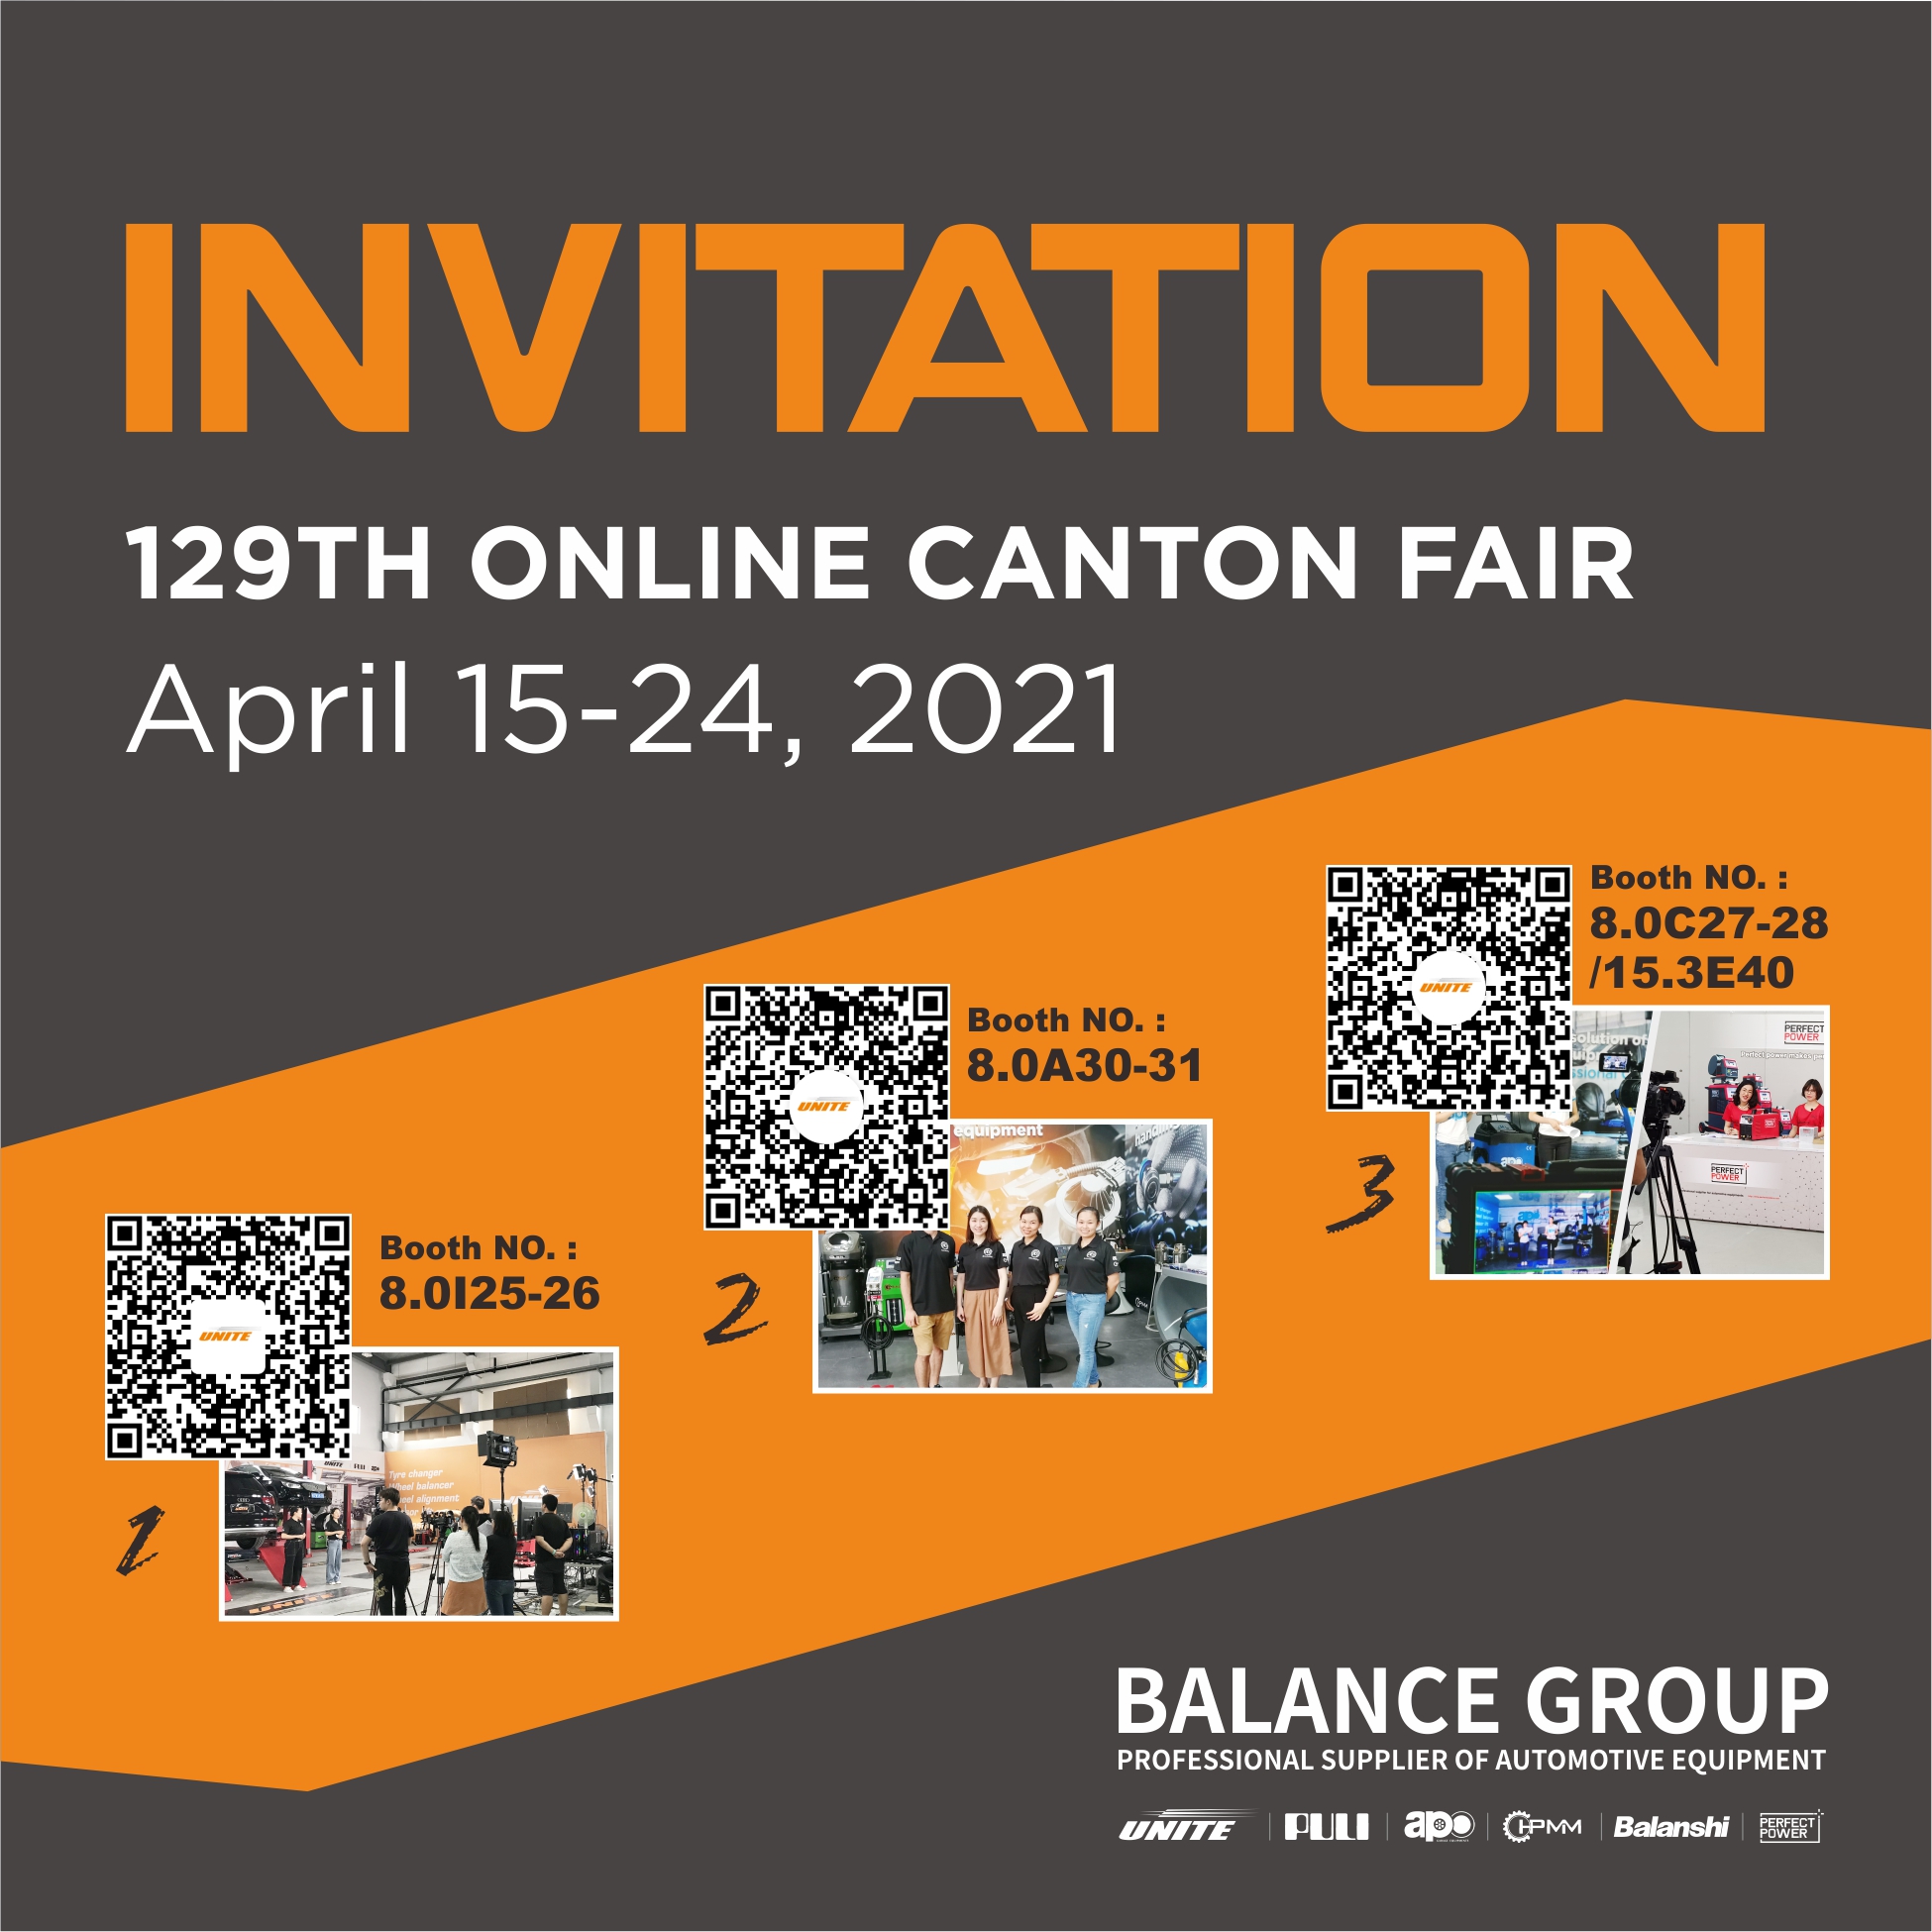 The 129th Canton Fair Invitation From Balance